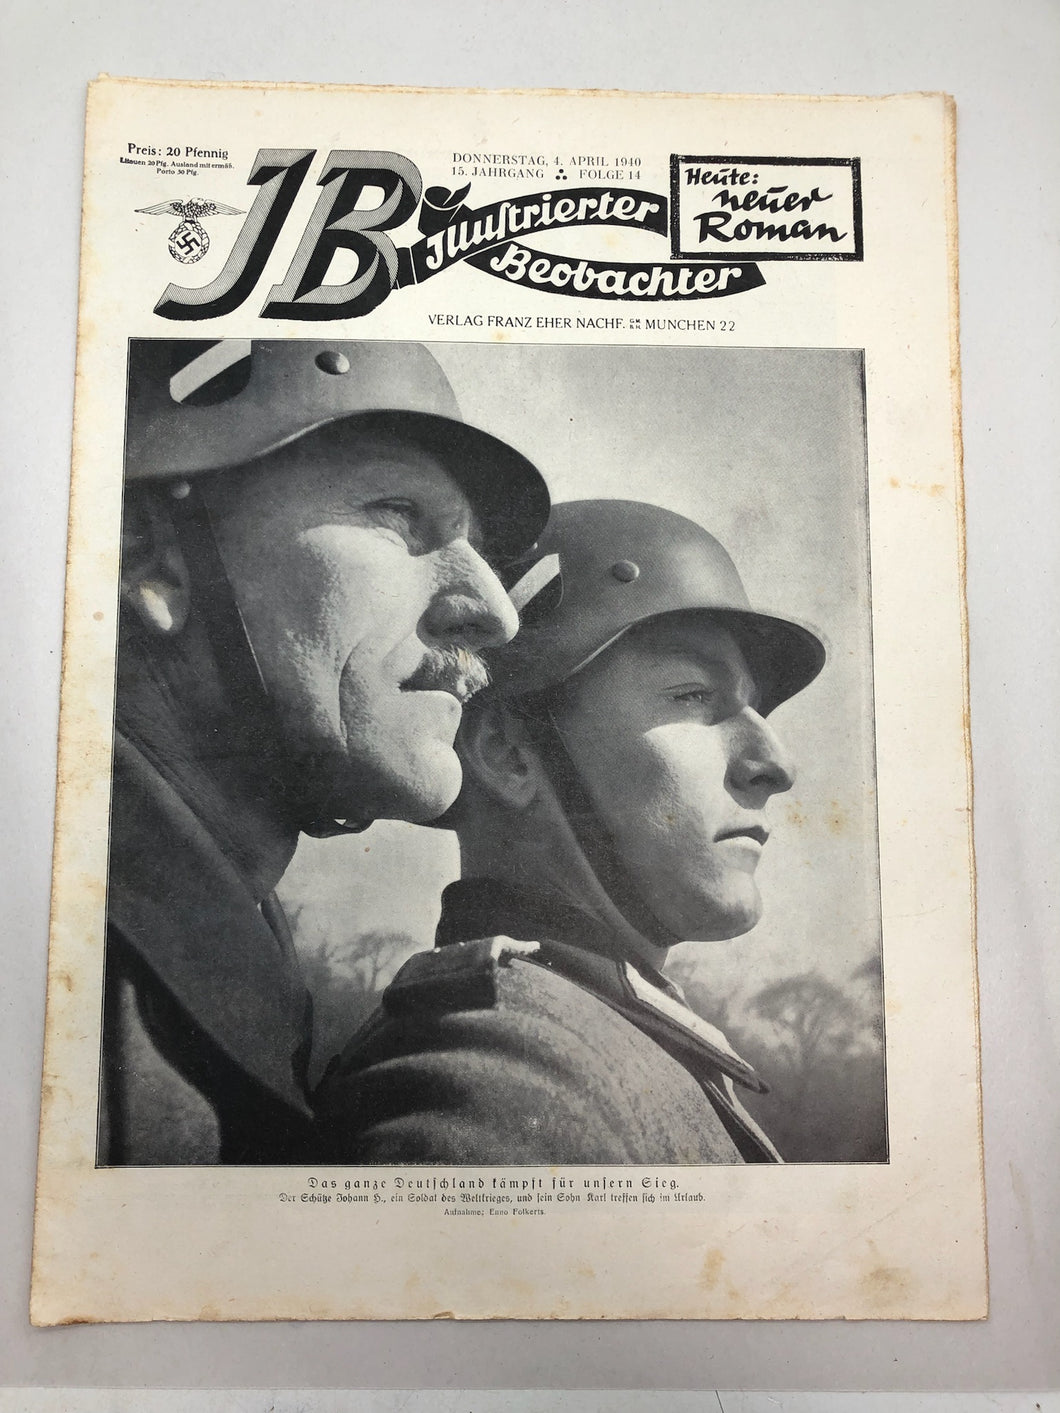 JB Juustrierter Beobachter NSDAP Magazine Original WW2 German - 4 April 1940